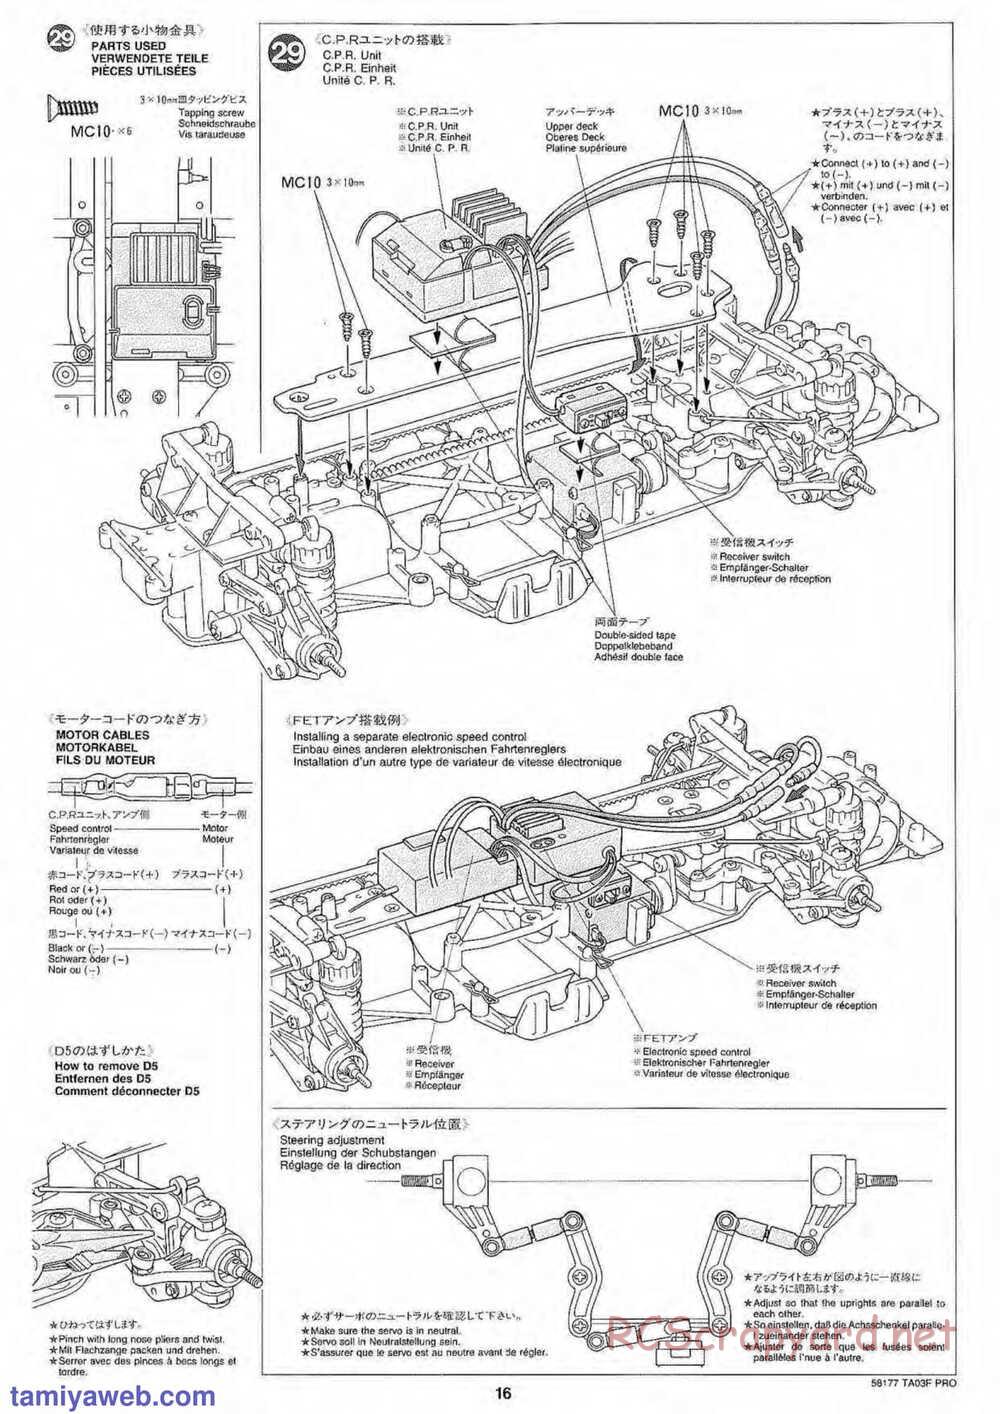 Tamiya - TA-03F Pro Chassis - Manual - Page 16